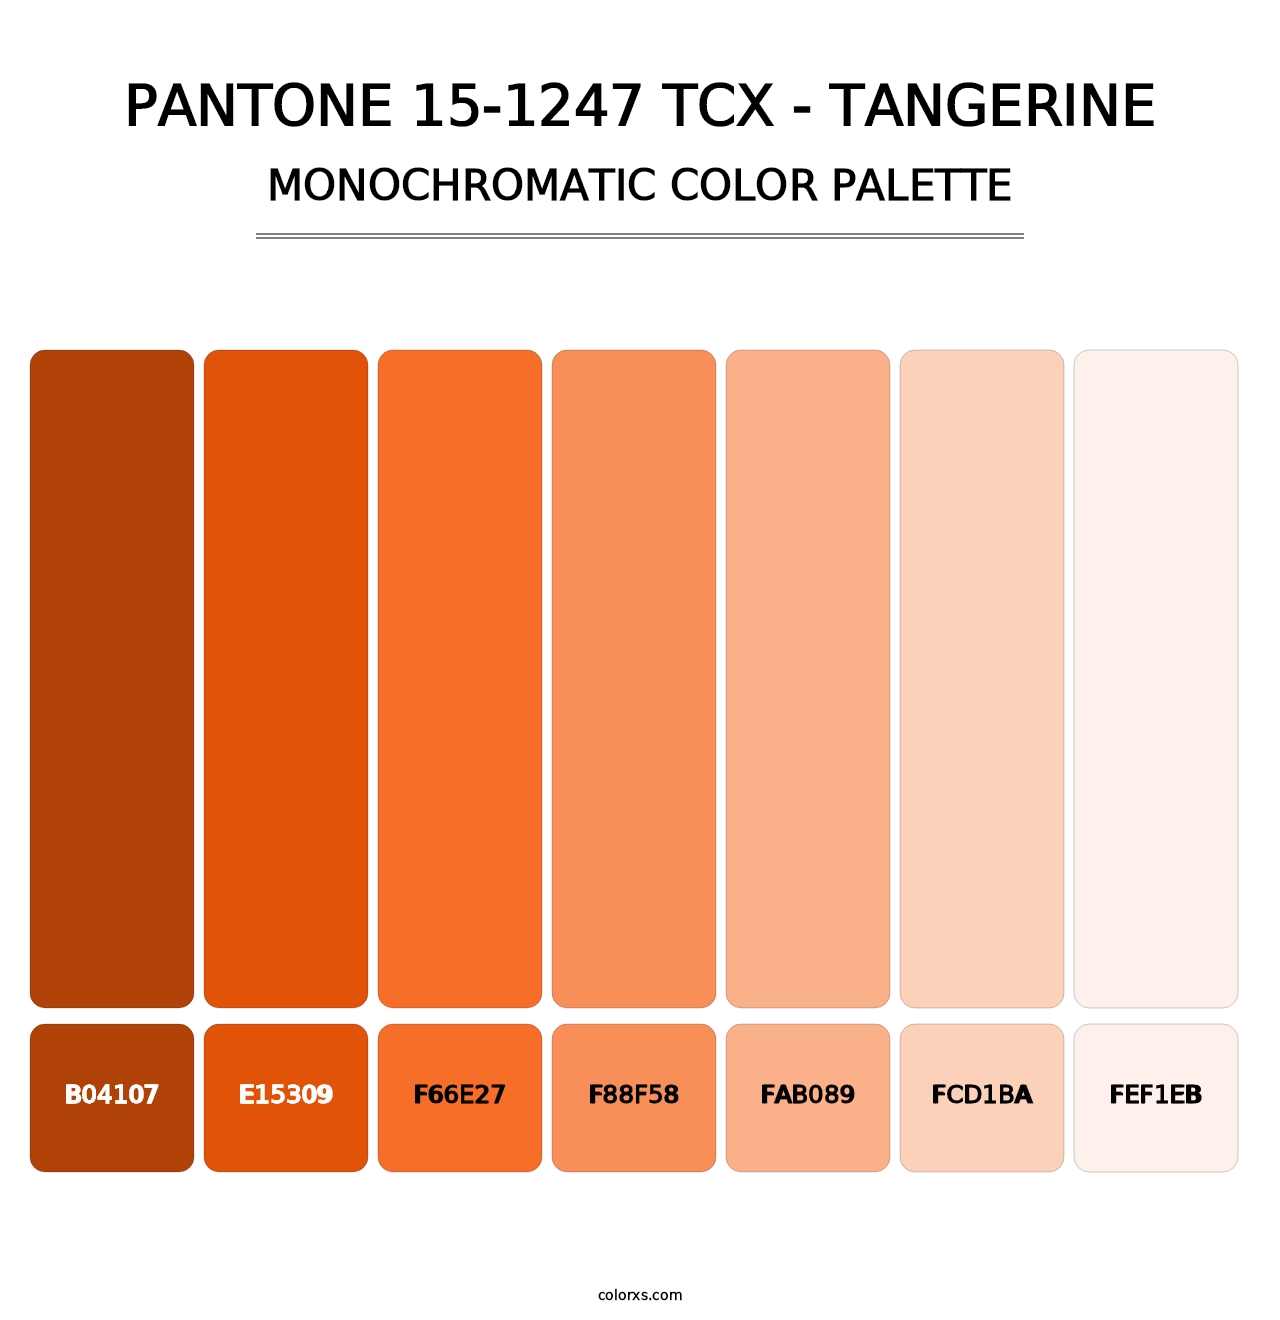 PANTONE 15-1247 TCX - Tangerine - Monochromatic Color Palette